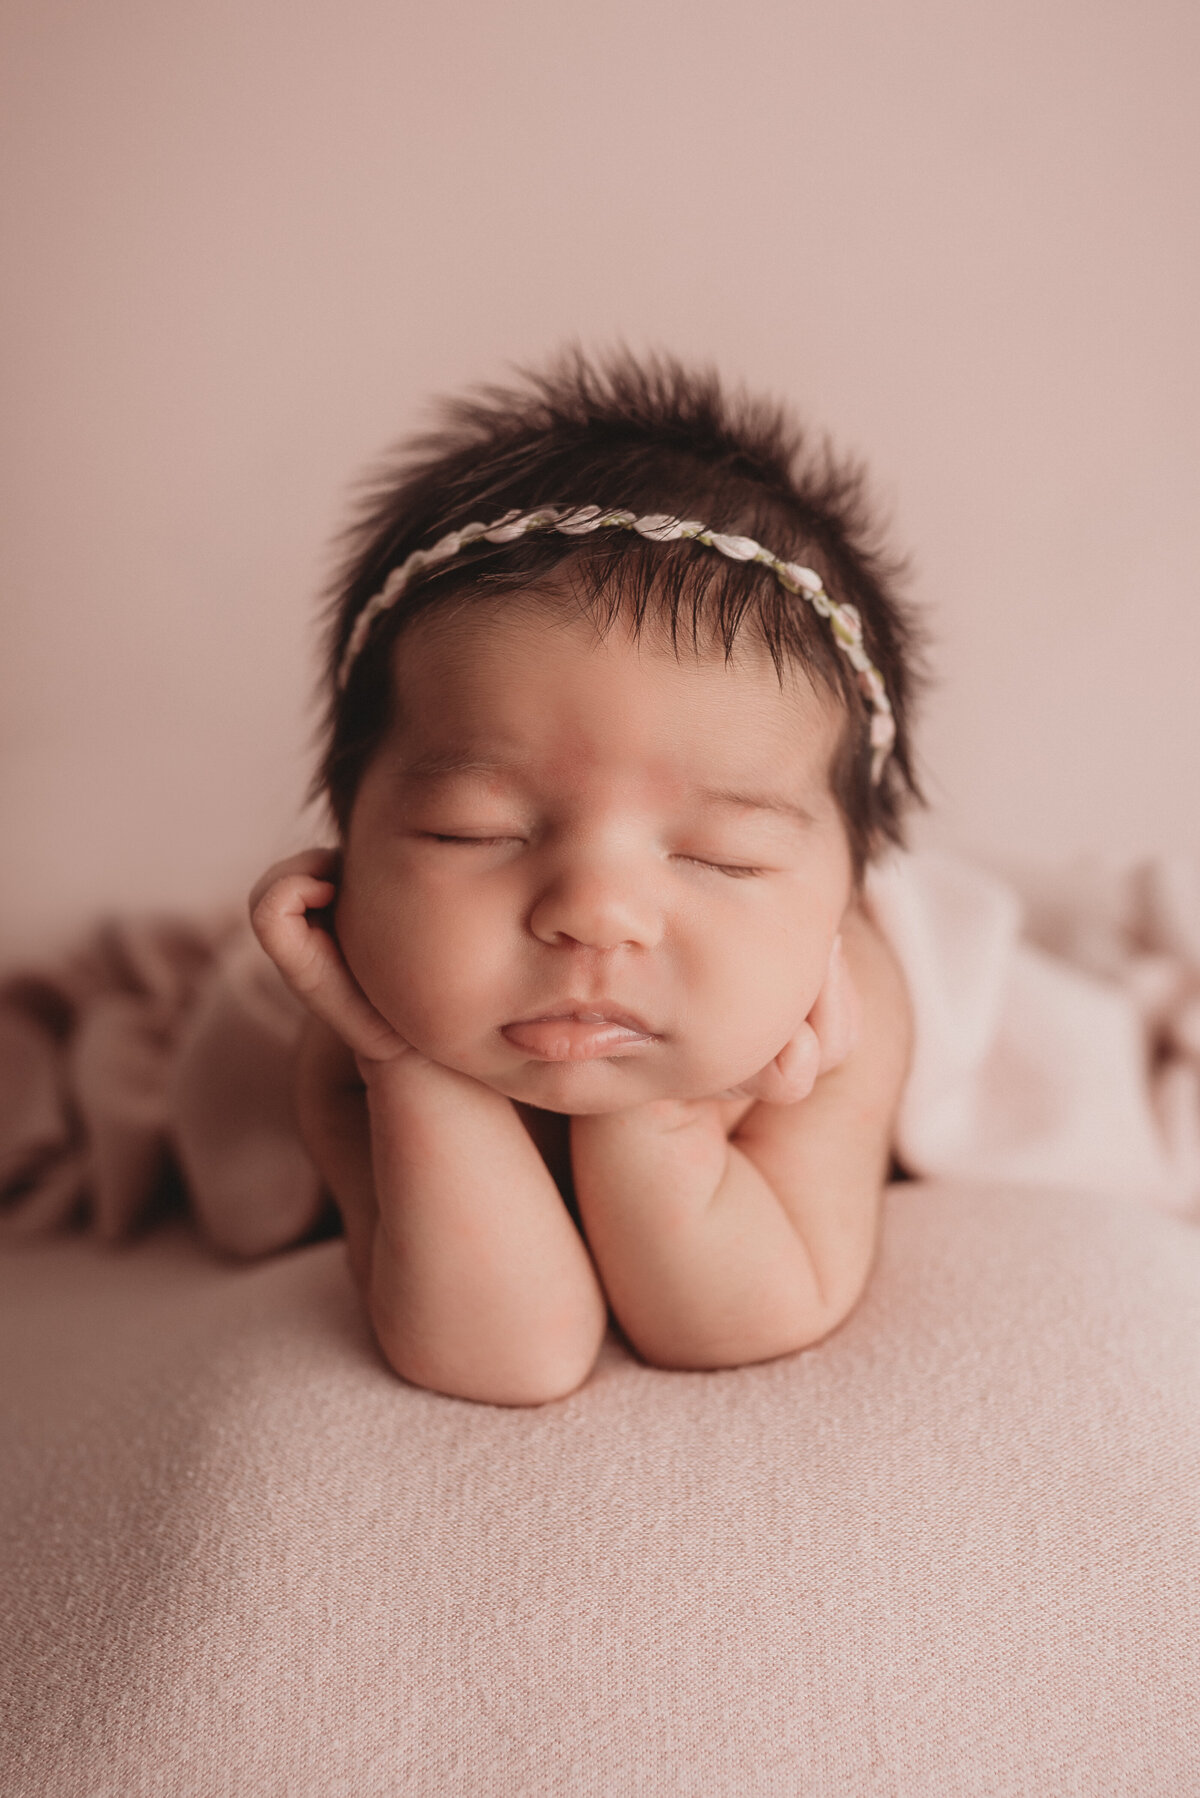 Newborn baby girl posed on pink fabric with chin on hands at Marietta newborn photography studio